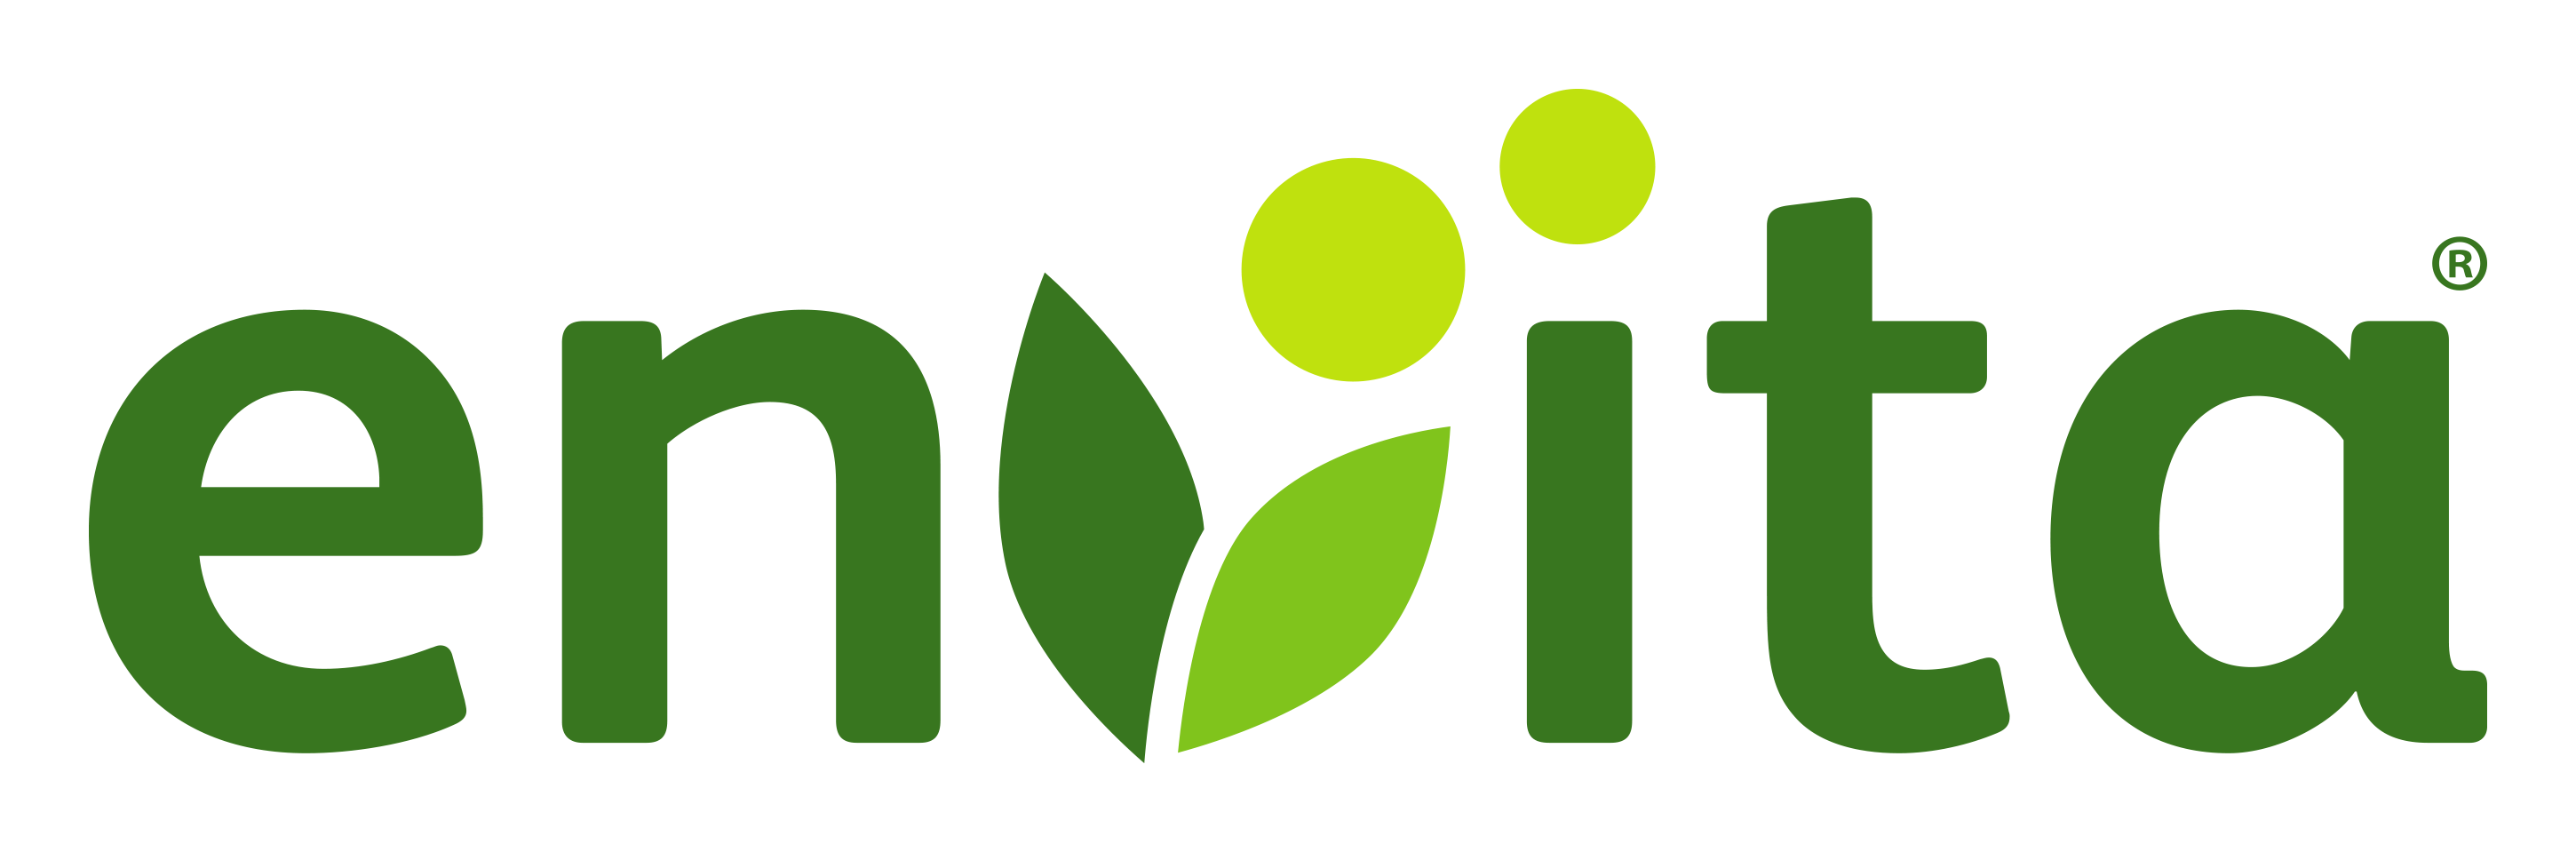 Envita logo in green